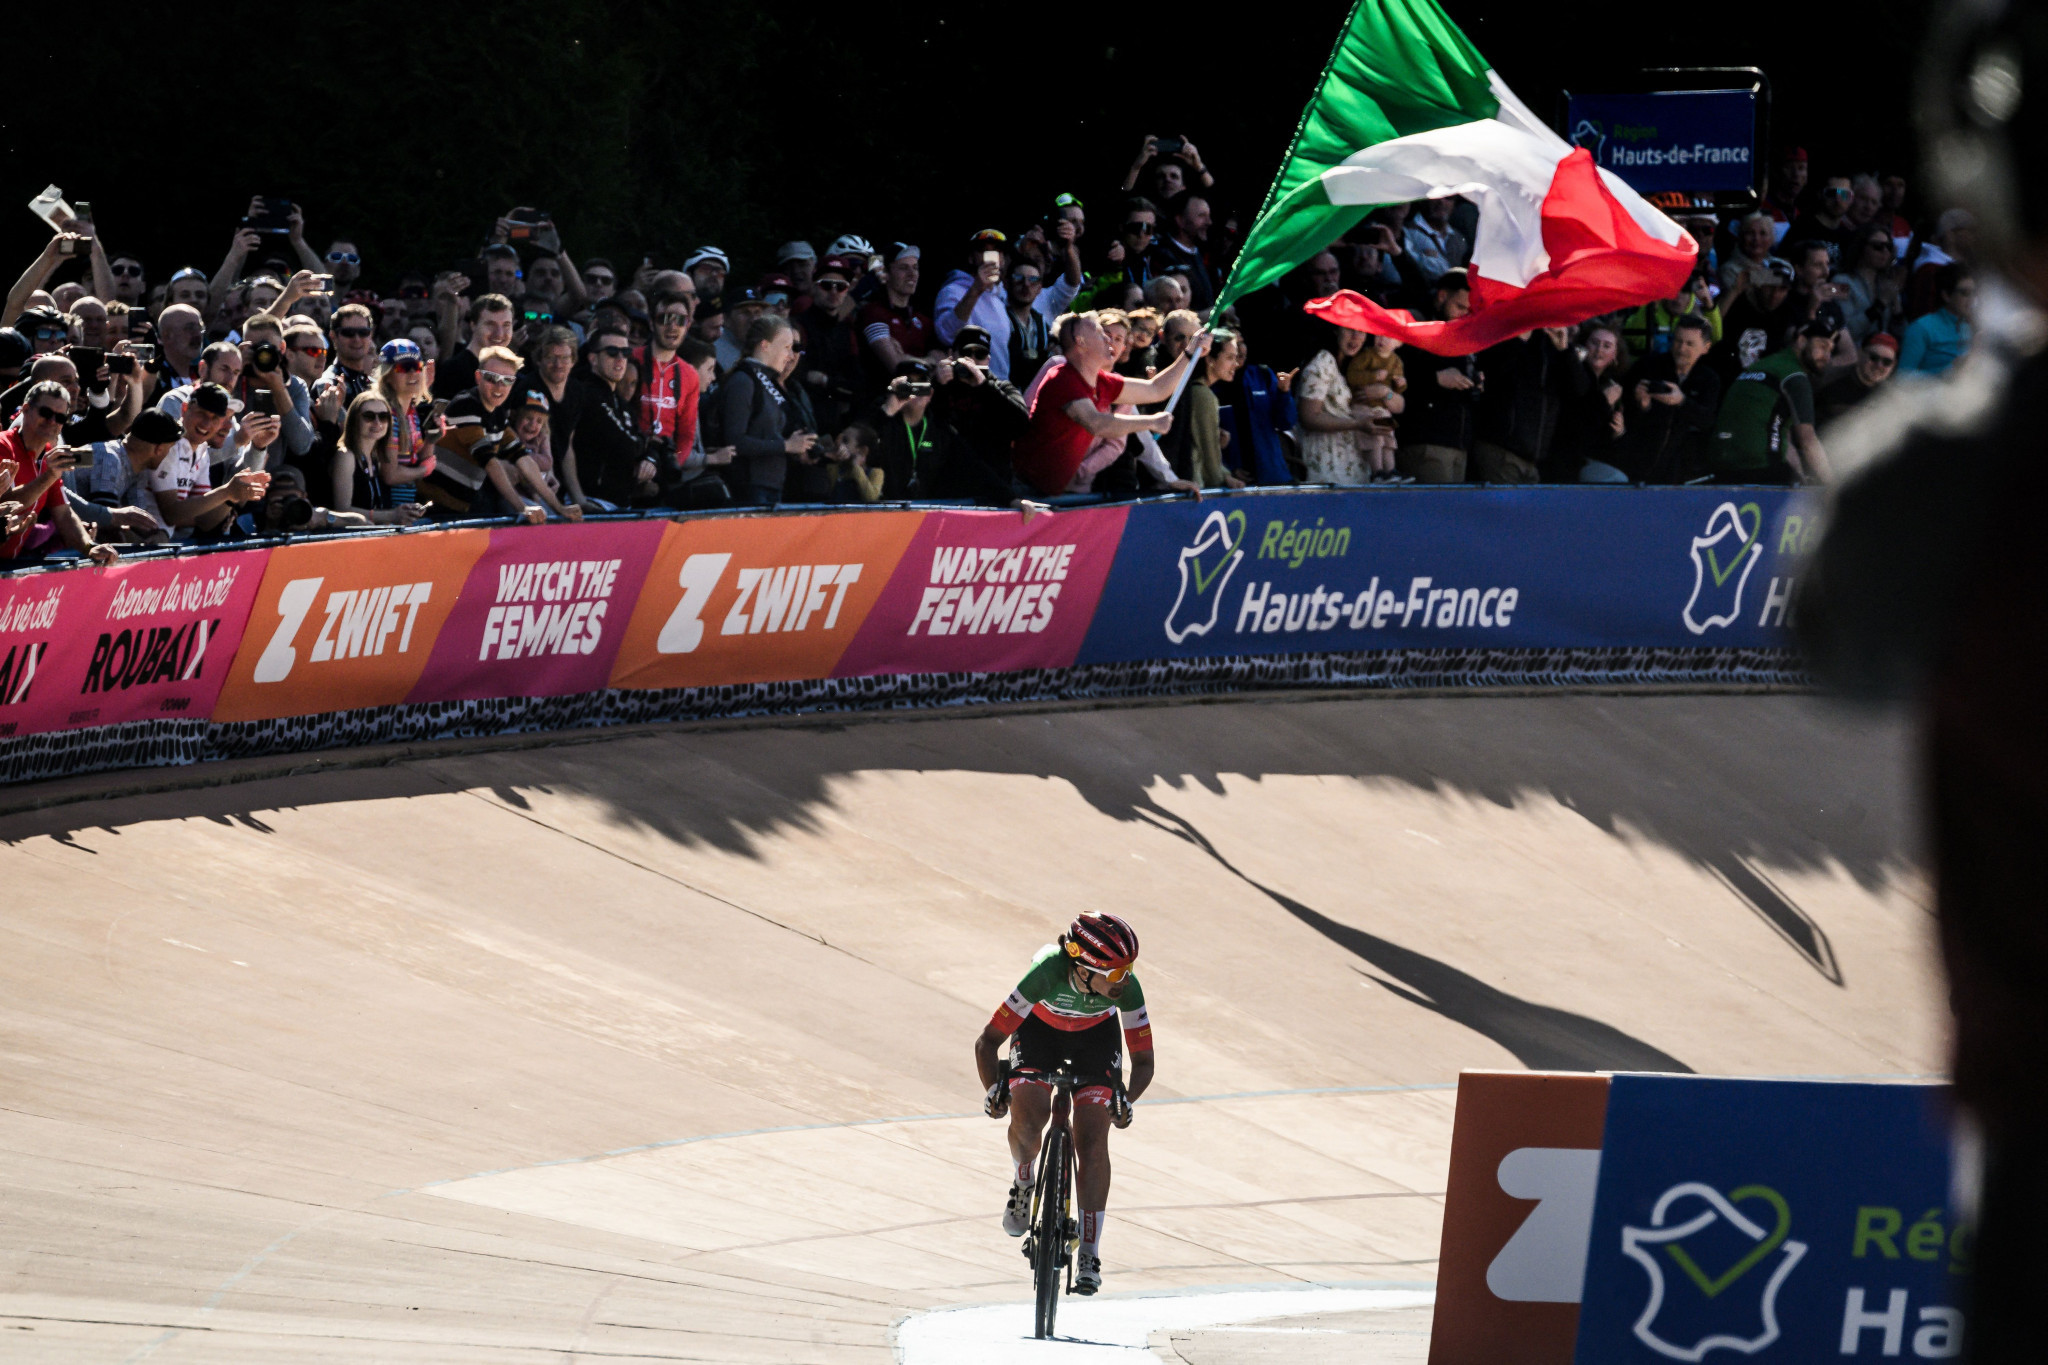 Elisa Longo Borghini won the women's Paris-Roubaix for the first time ©Getty Images